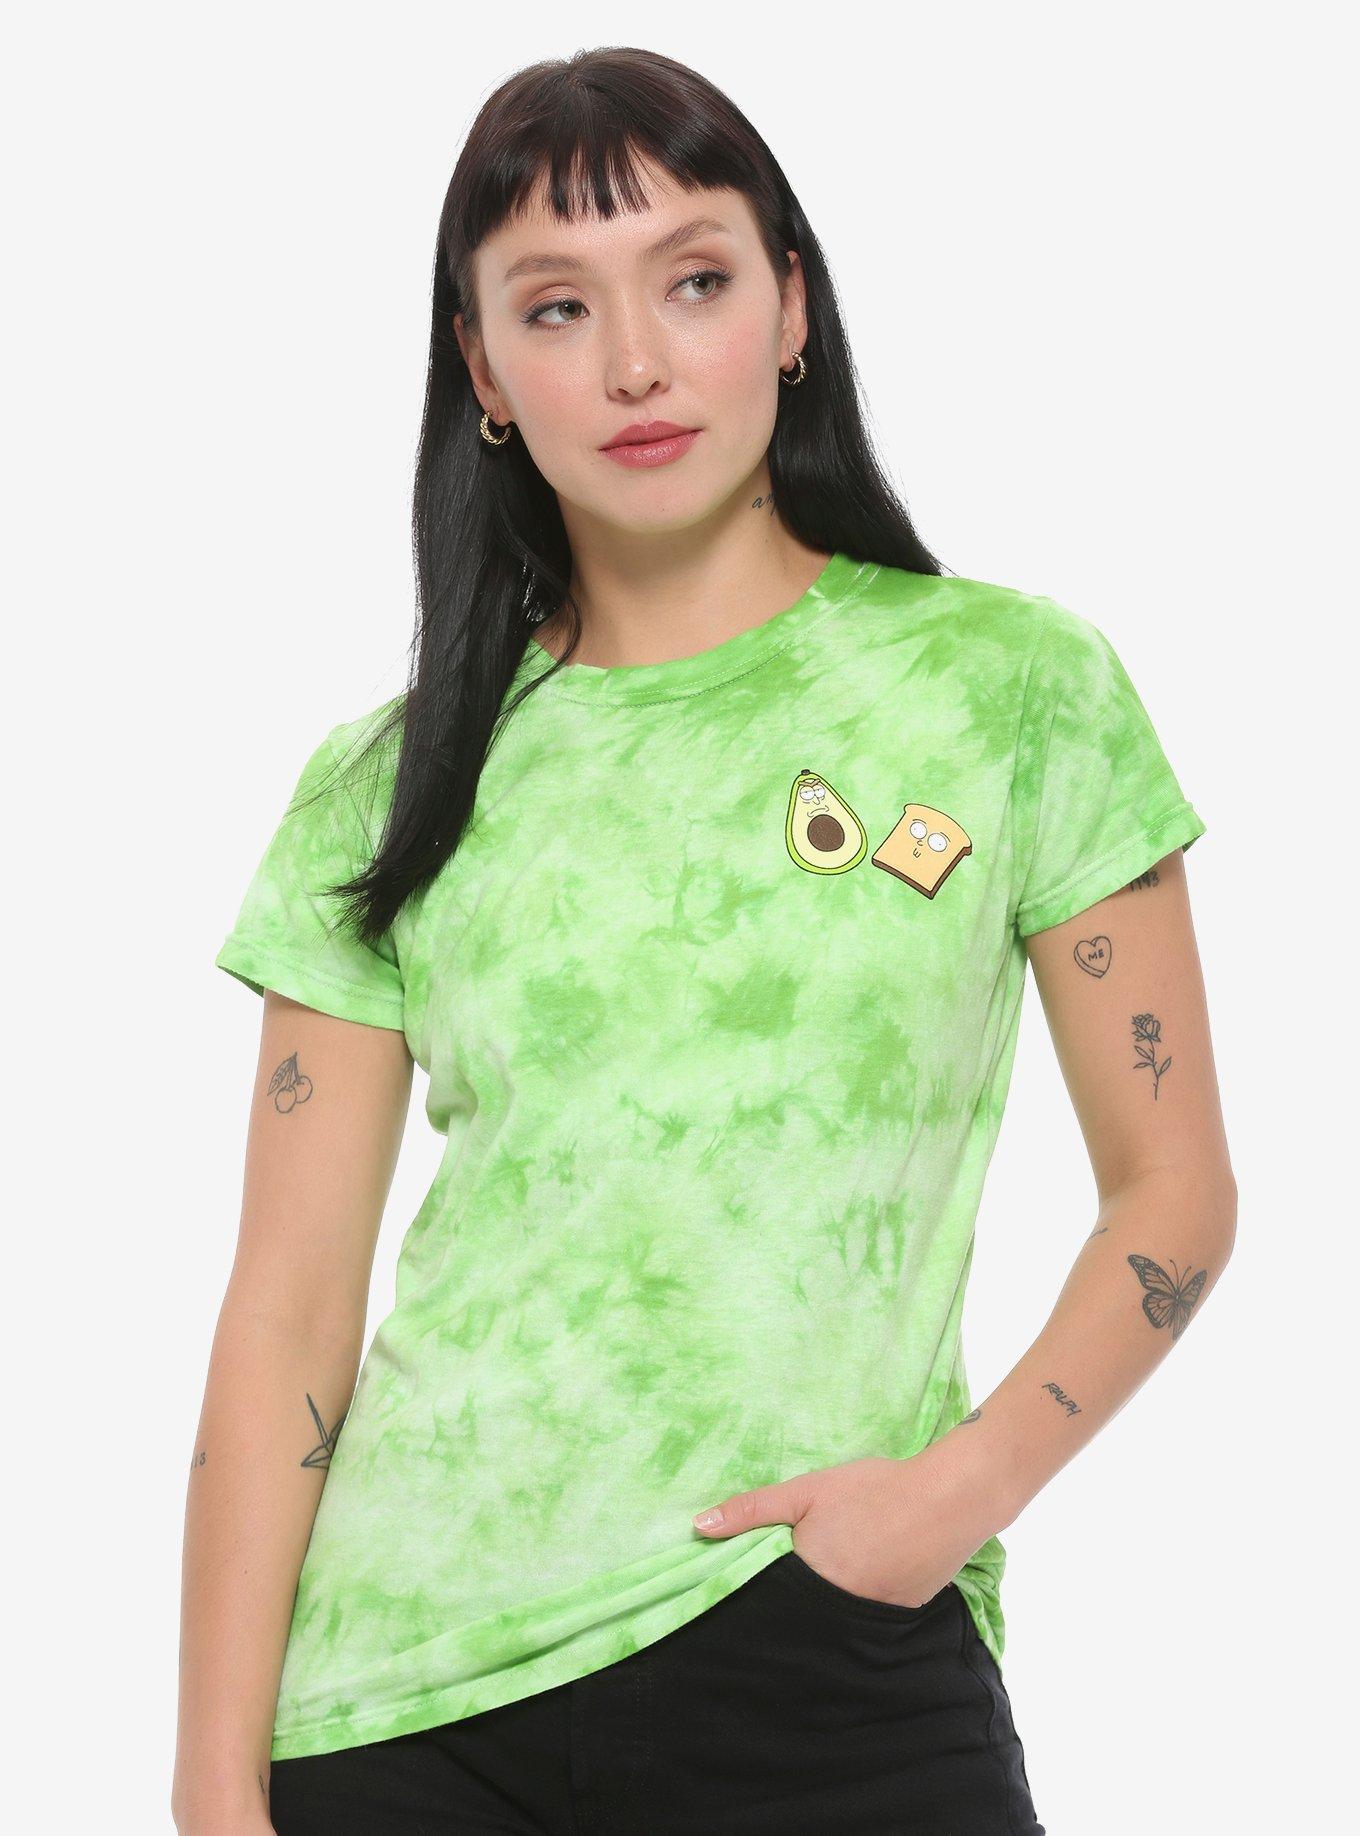 Rick And Morty Avocado Toast Tie-Dye Girls T-Shirt, MULTI, hi-res